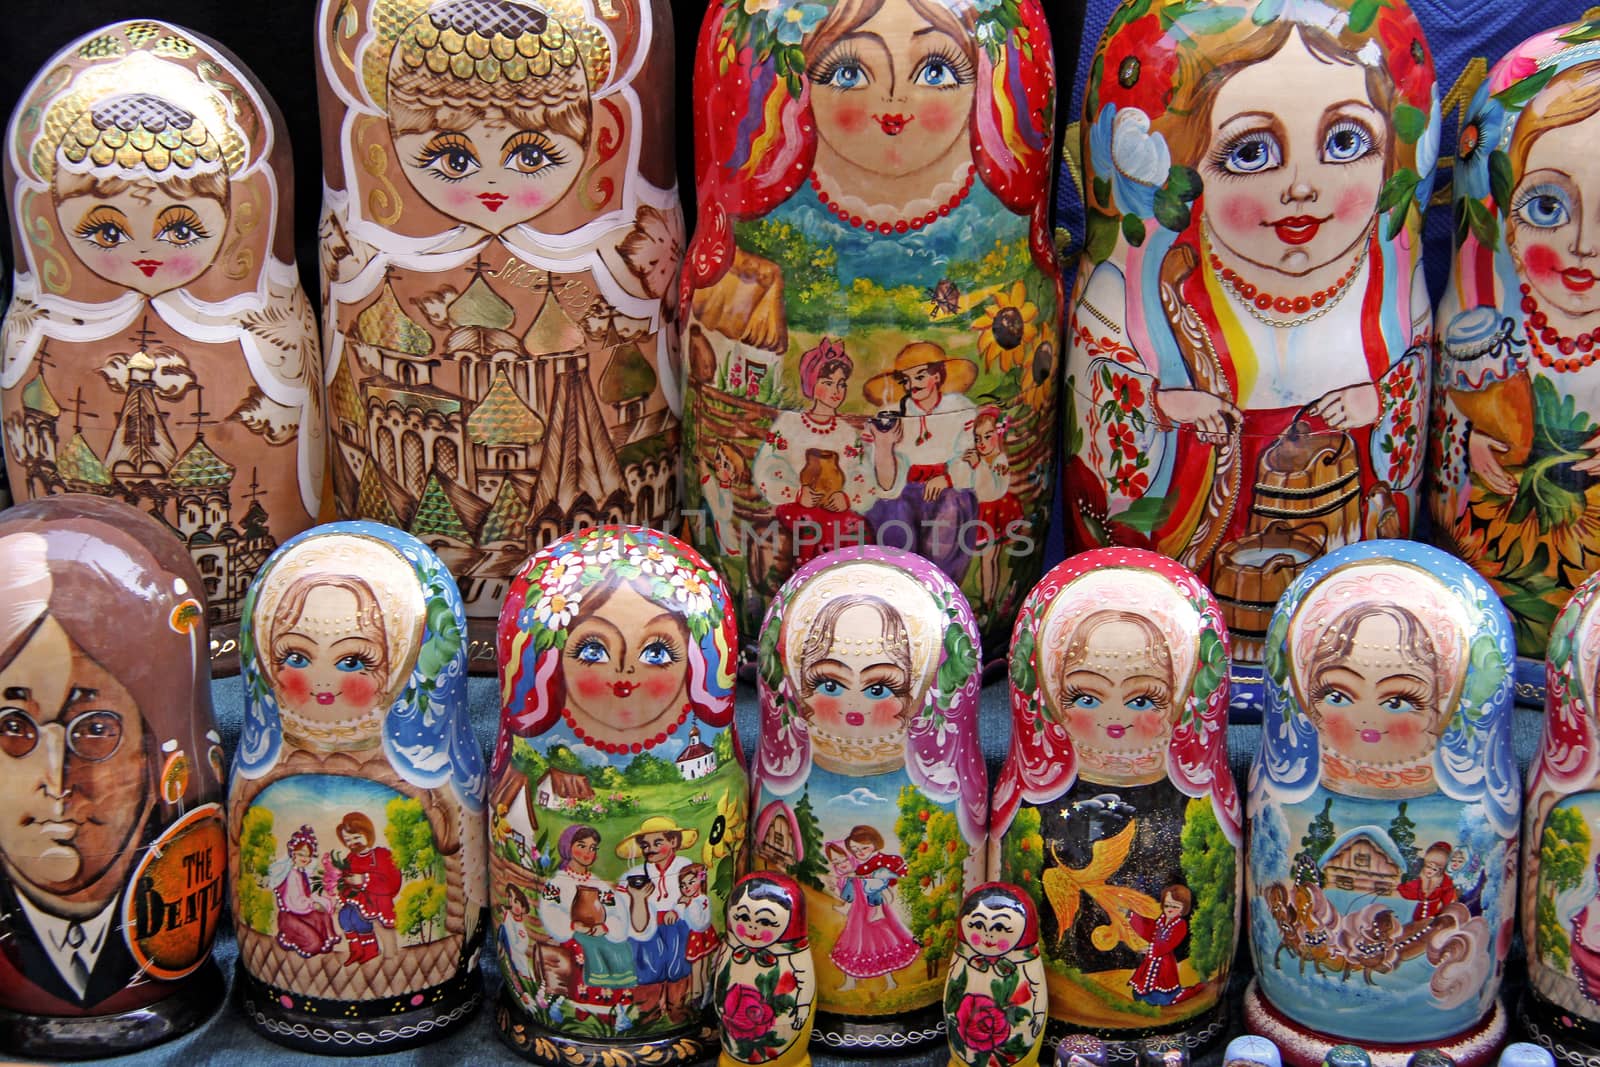 Kiev, Ukraine - August 28, 2011: Lots of Babushka / Matryoshka dolls. Very famous souvenir from Russia and other ex - Soviet countries. Taken on a street market in Kiev